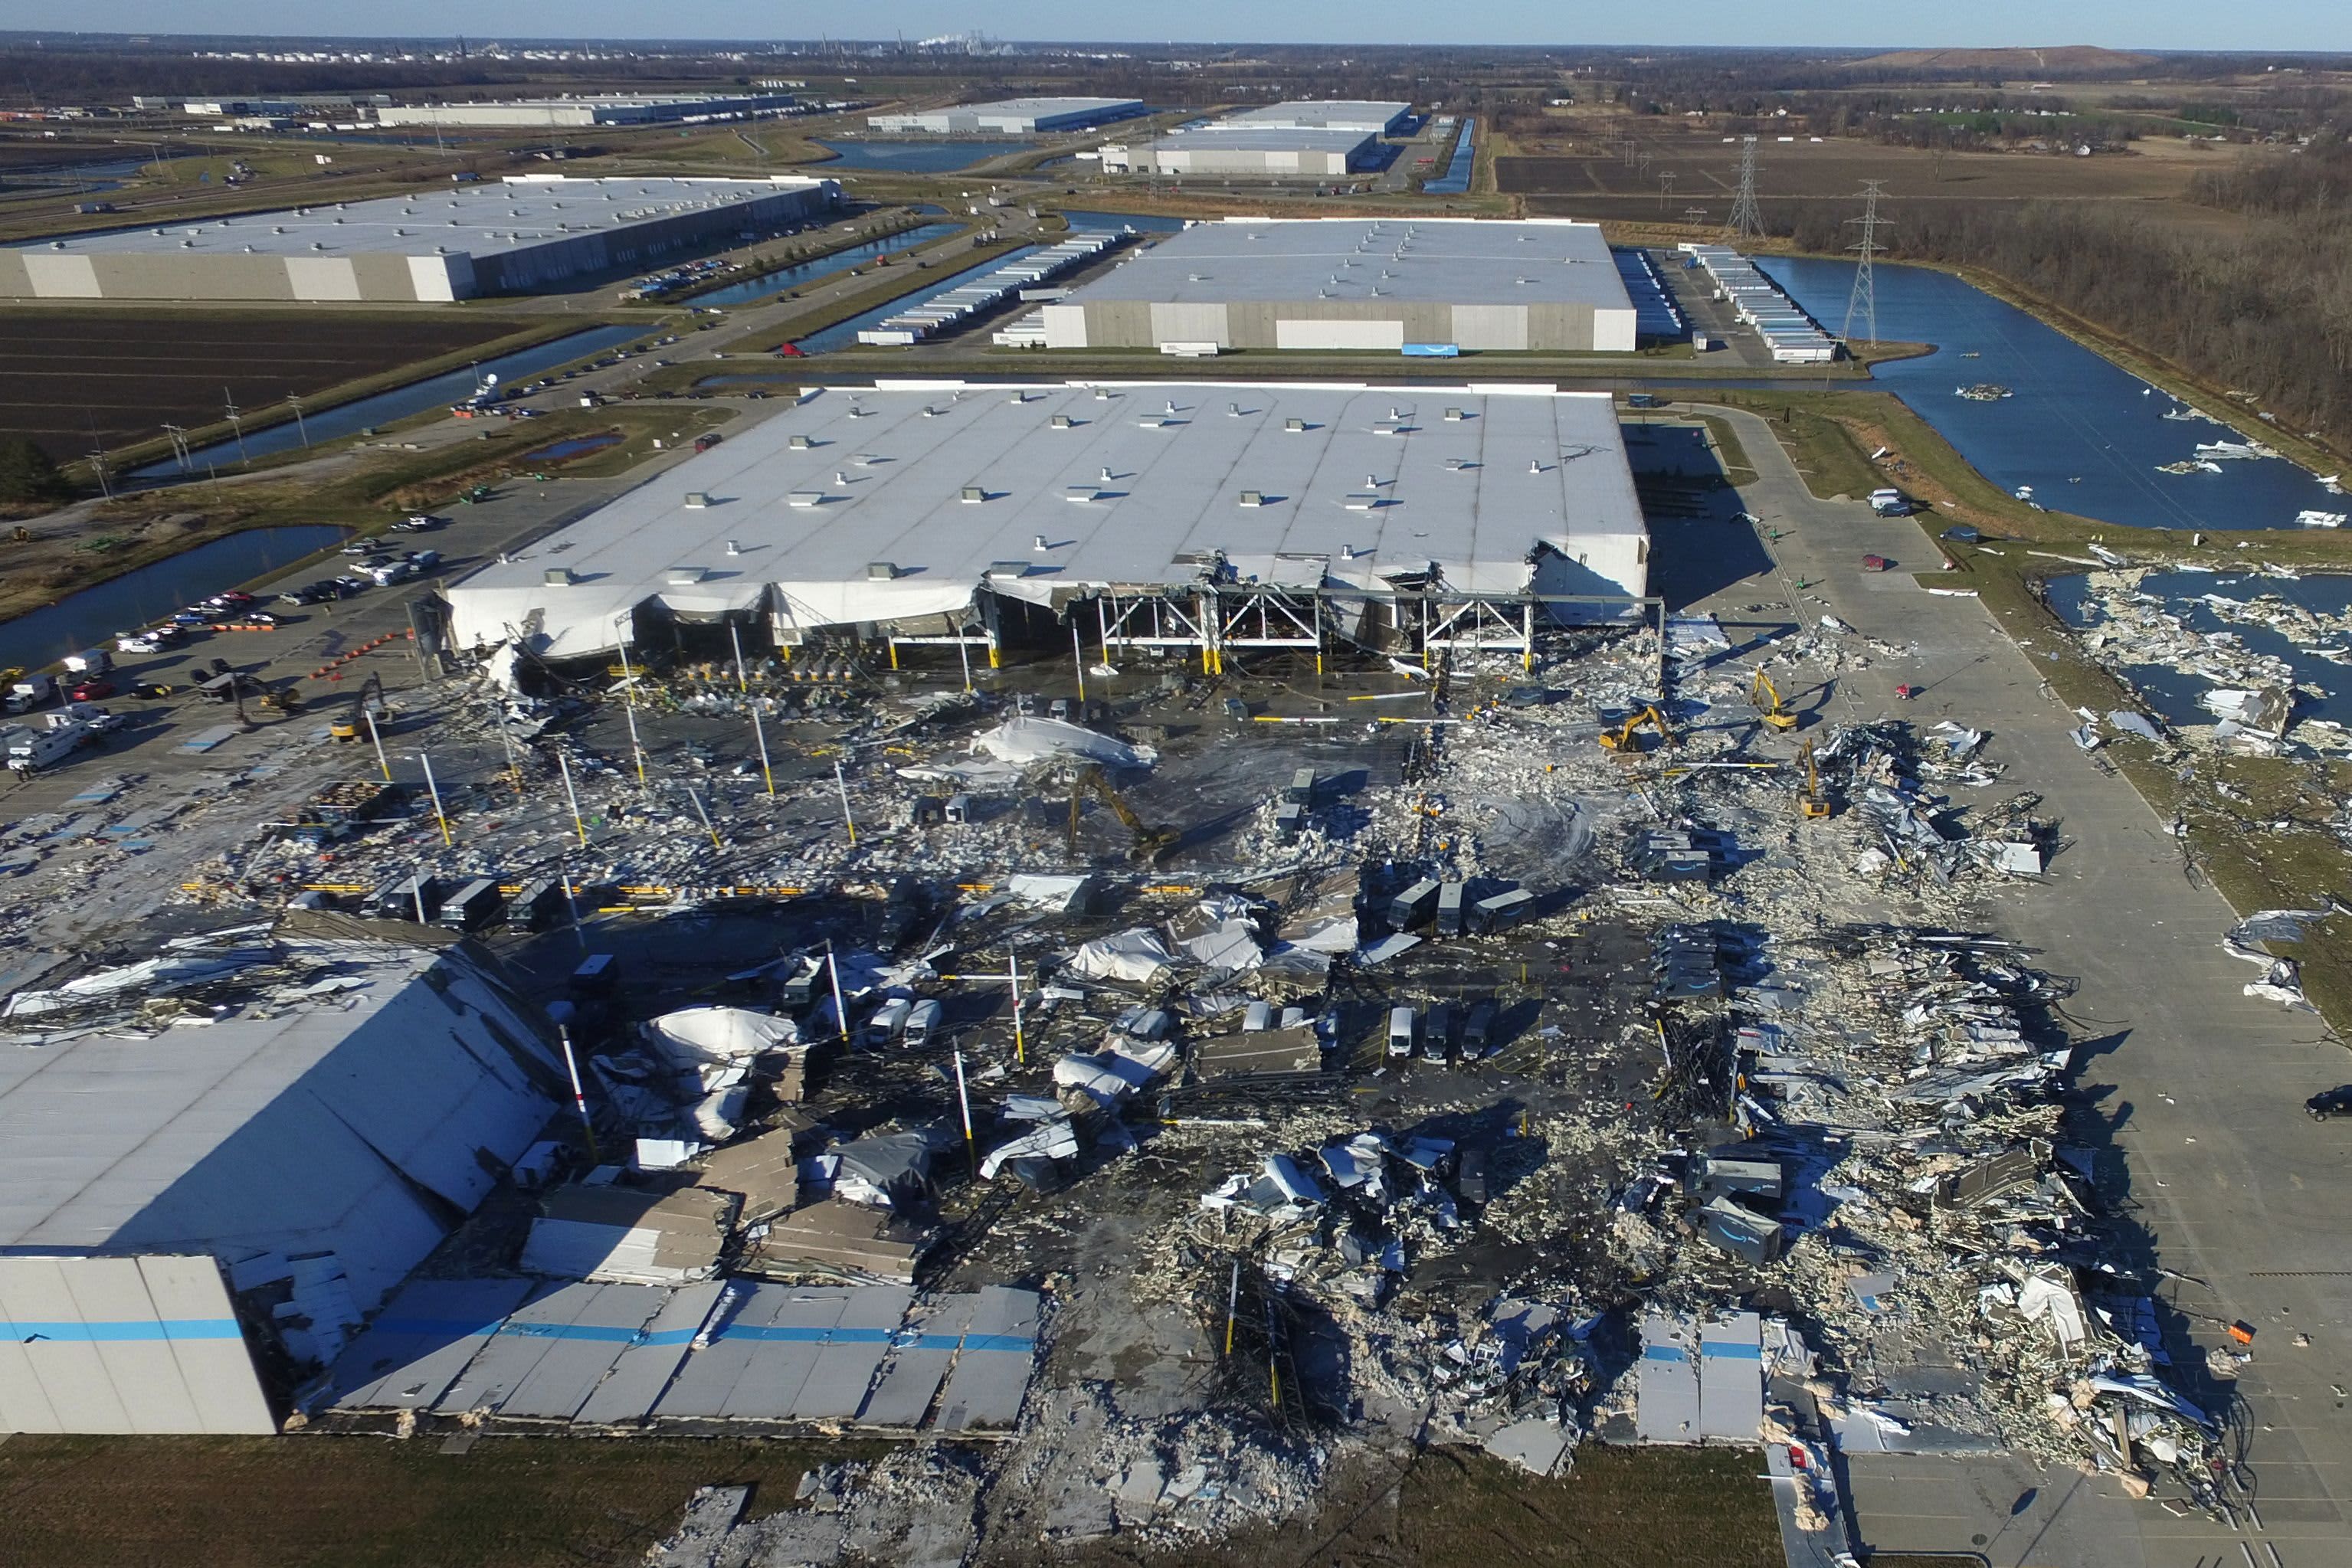 OSHA opens probe into deadly Amazon warehouse collapse in Illinois